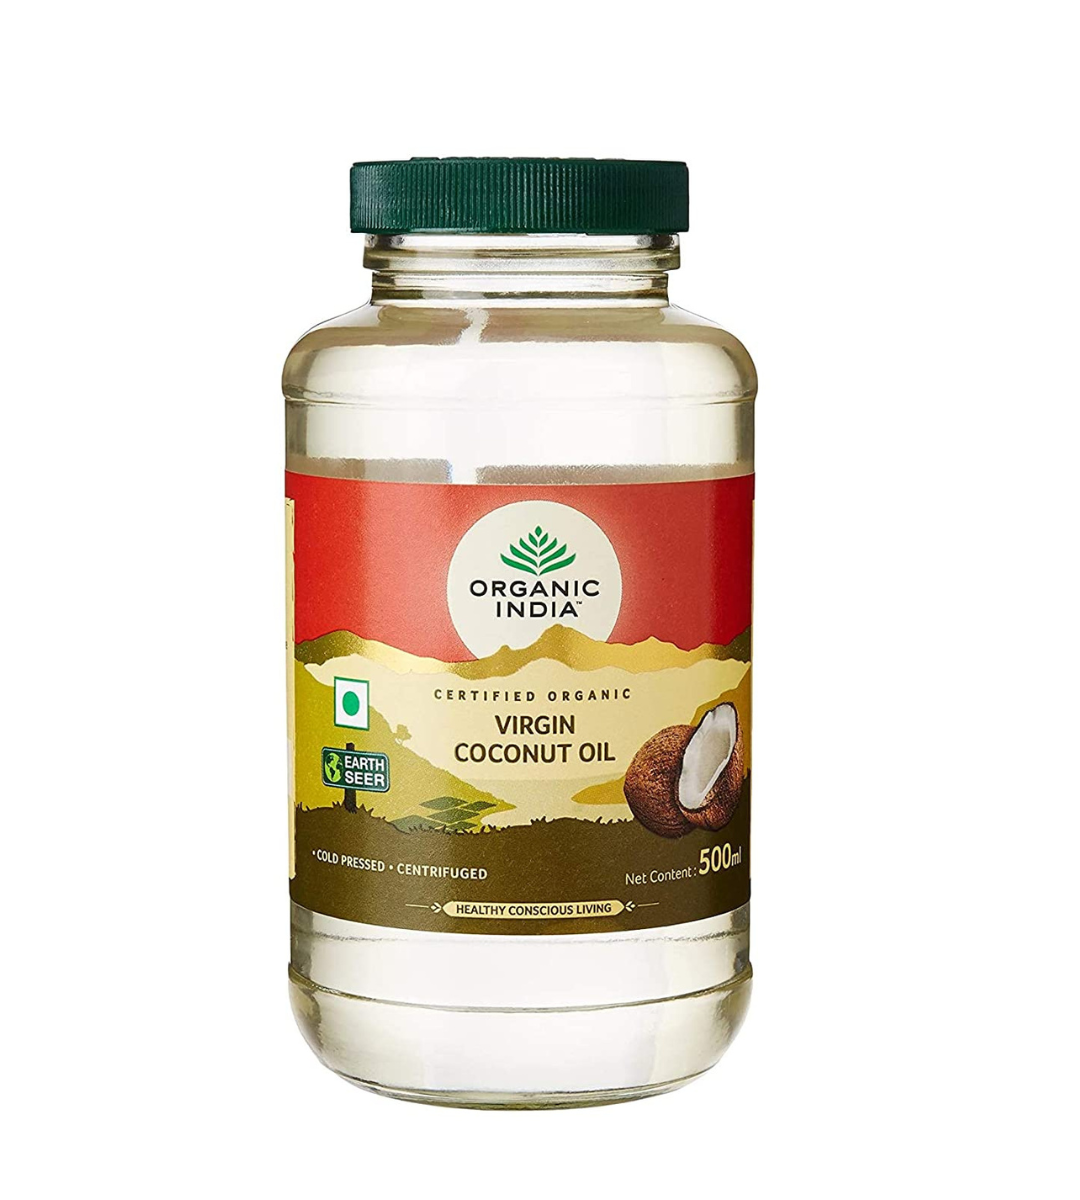 ORGANIC INDIA Cold Pressed Virgin Coconut Oil, 500ml